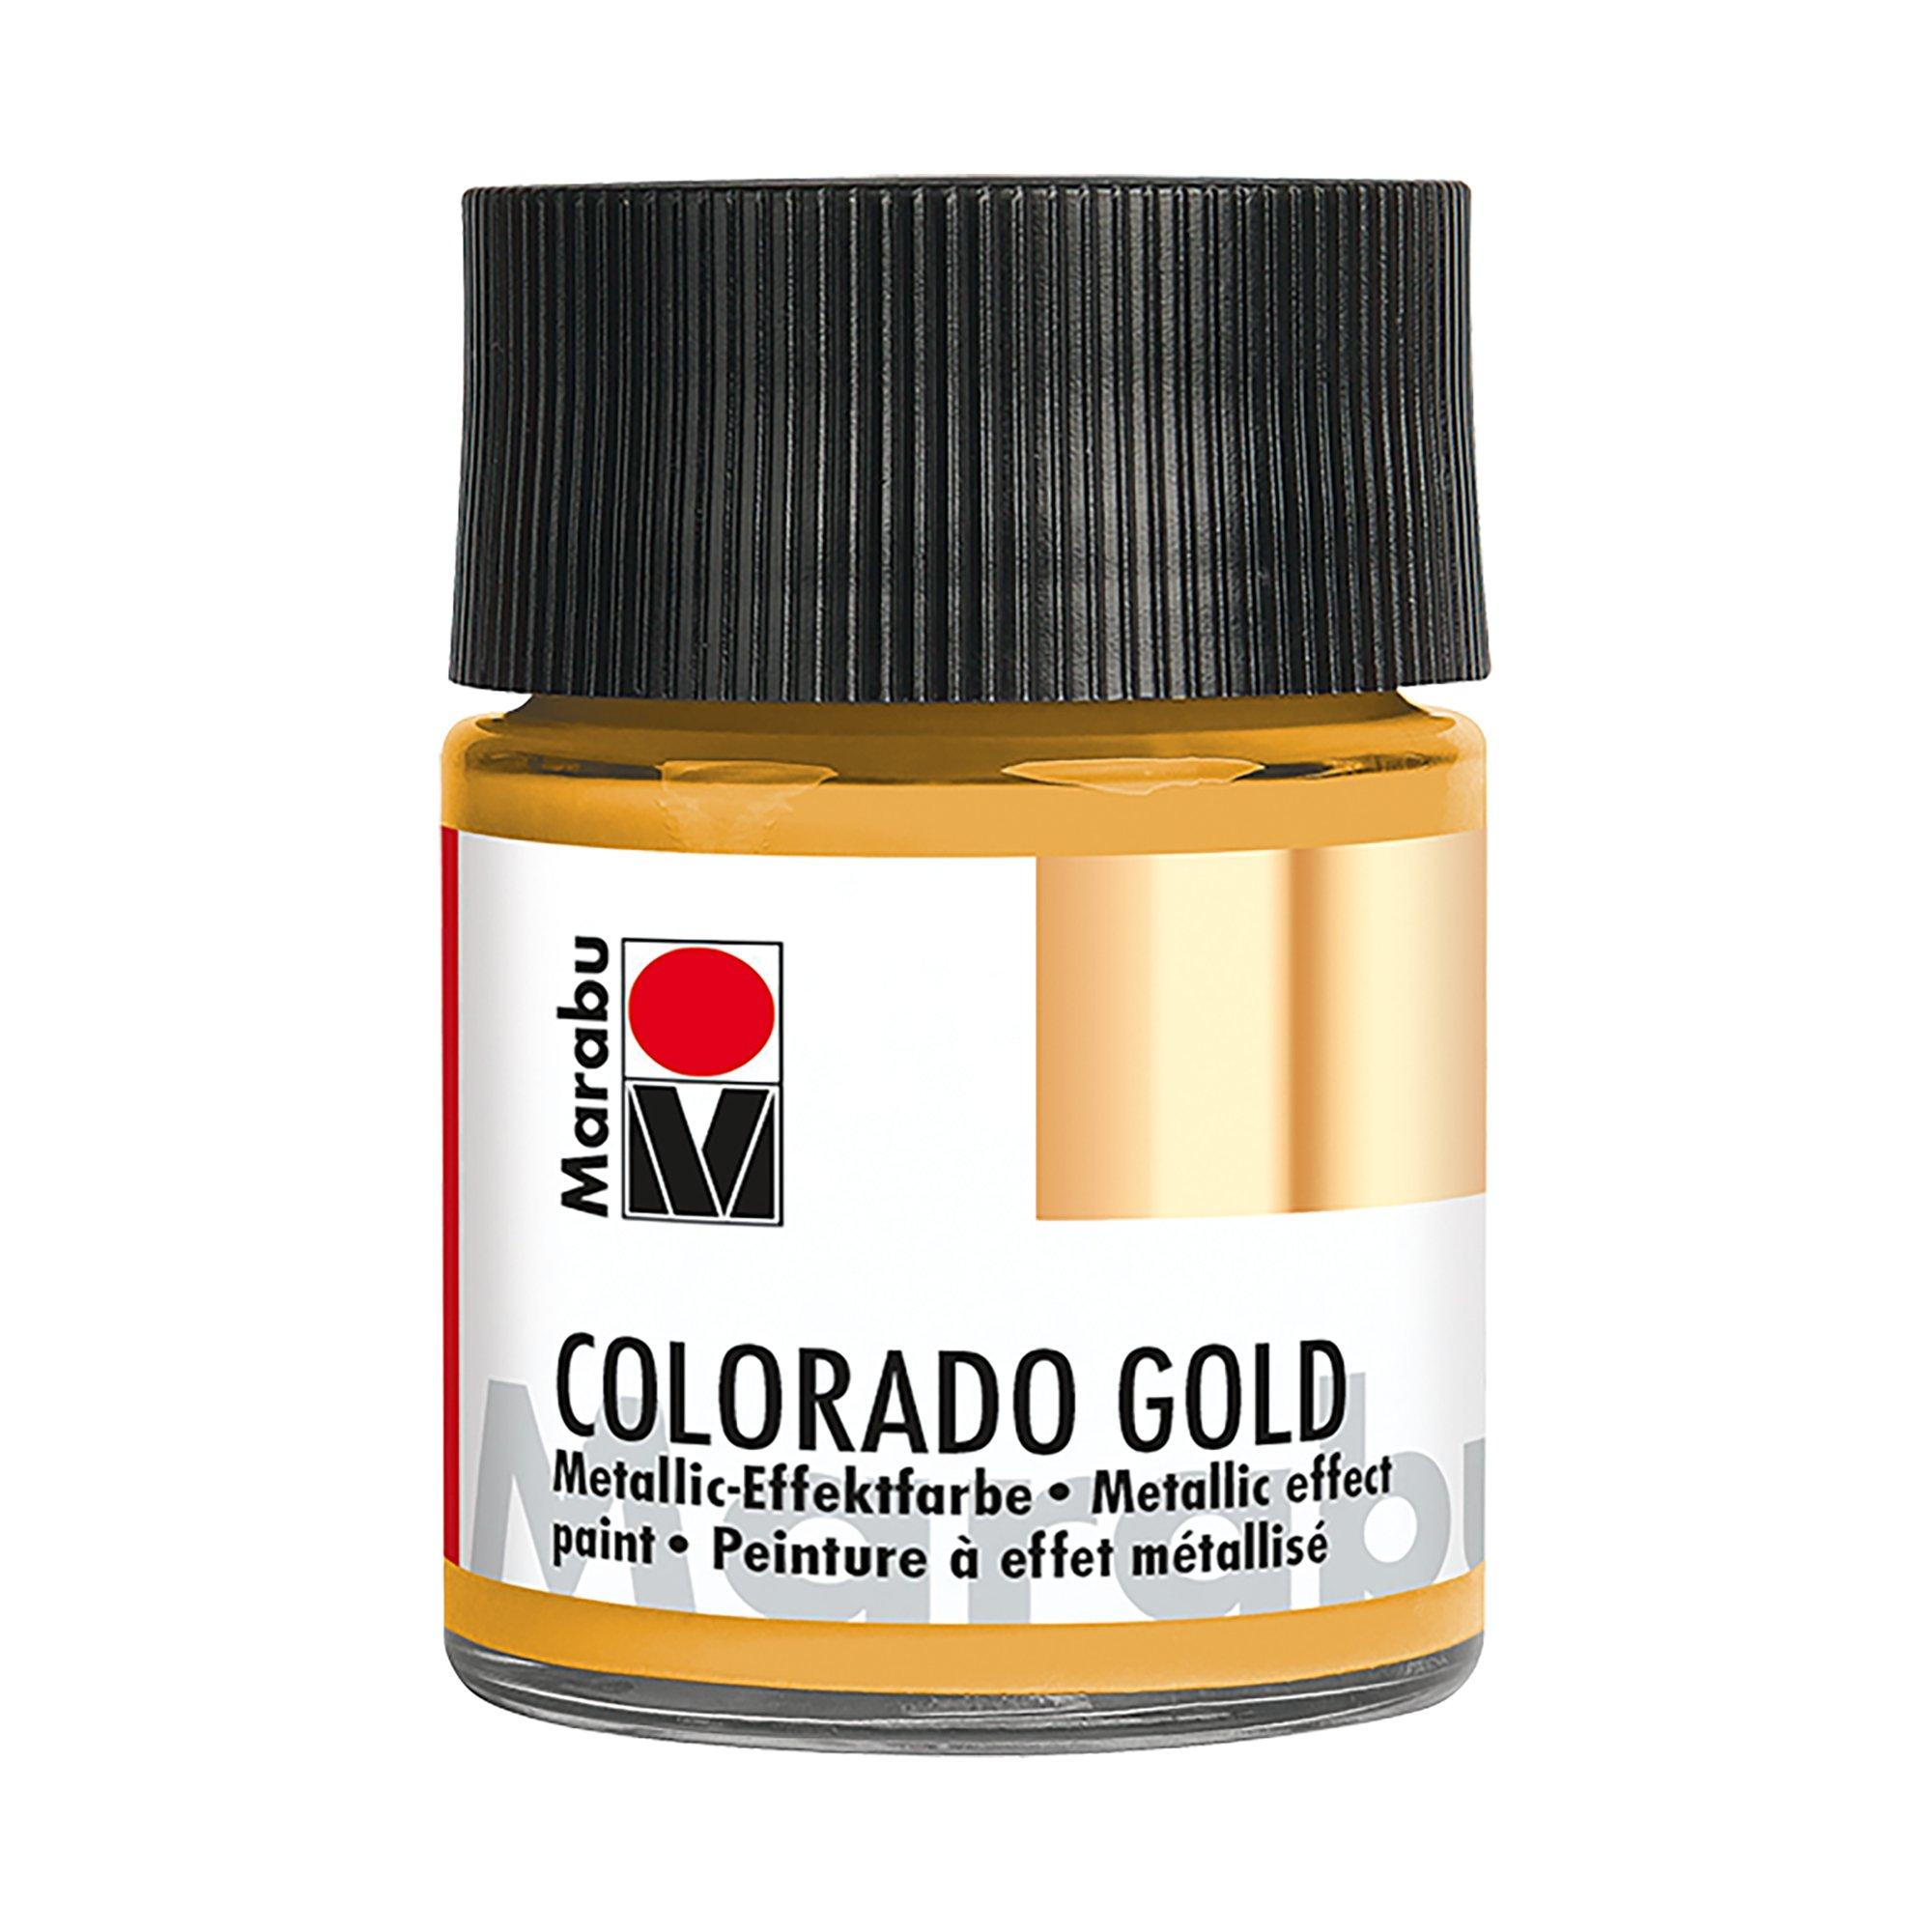 Marabu Metallic Effektfarbe, Colorado Gold Metallic-Gold 784 